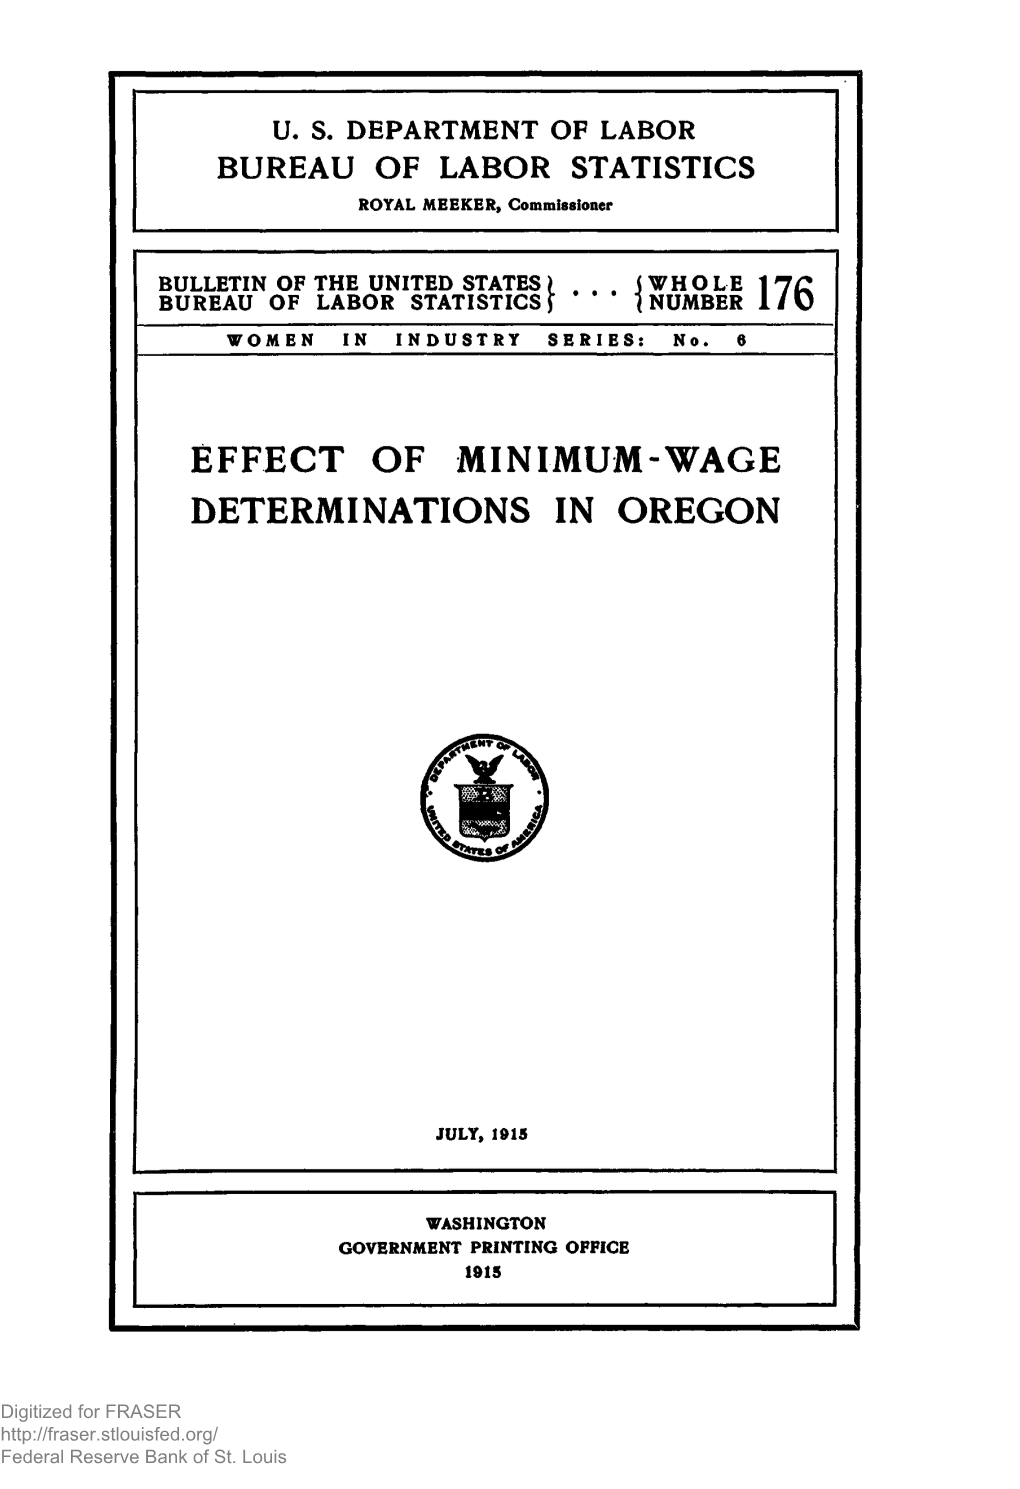 Effect of Minimum-Wage Determinations in Oregon